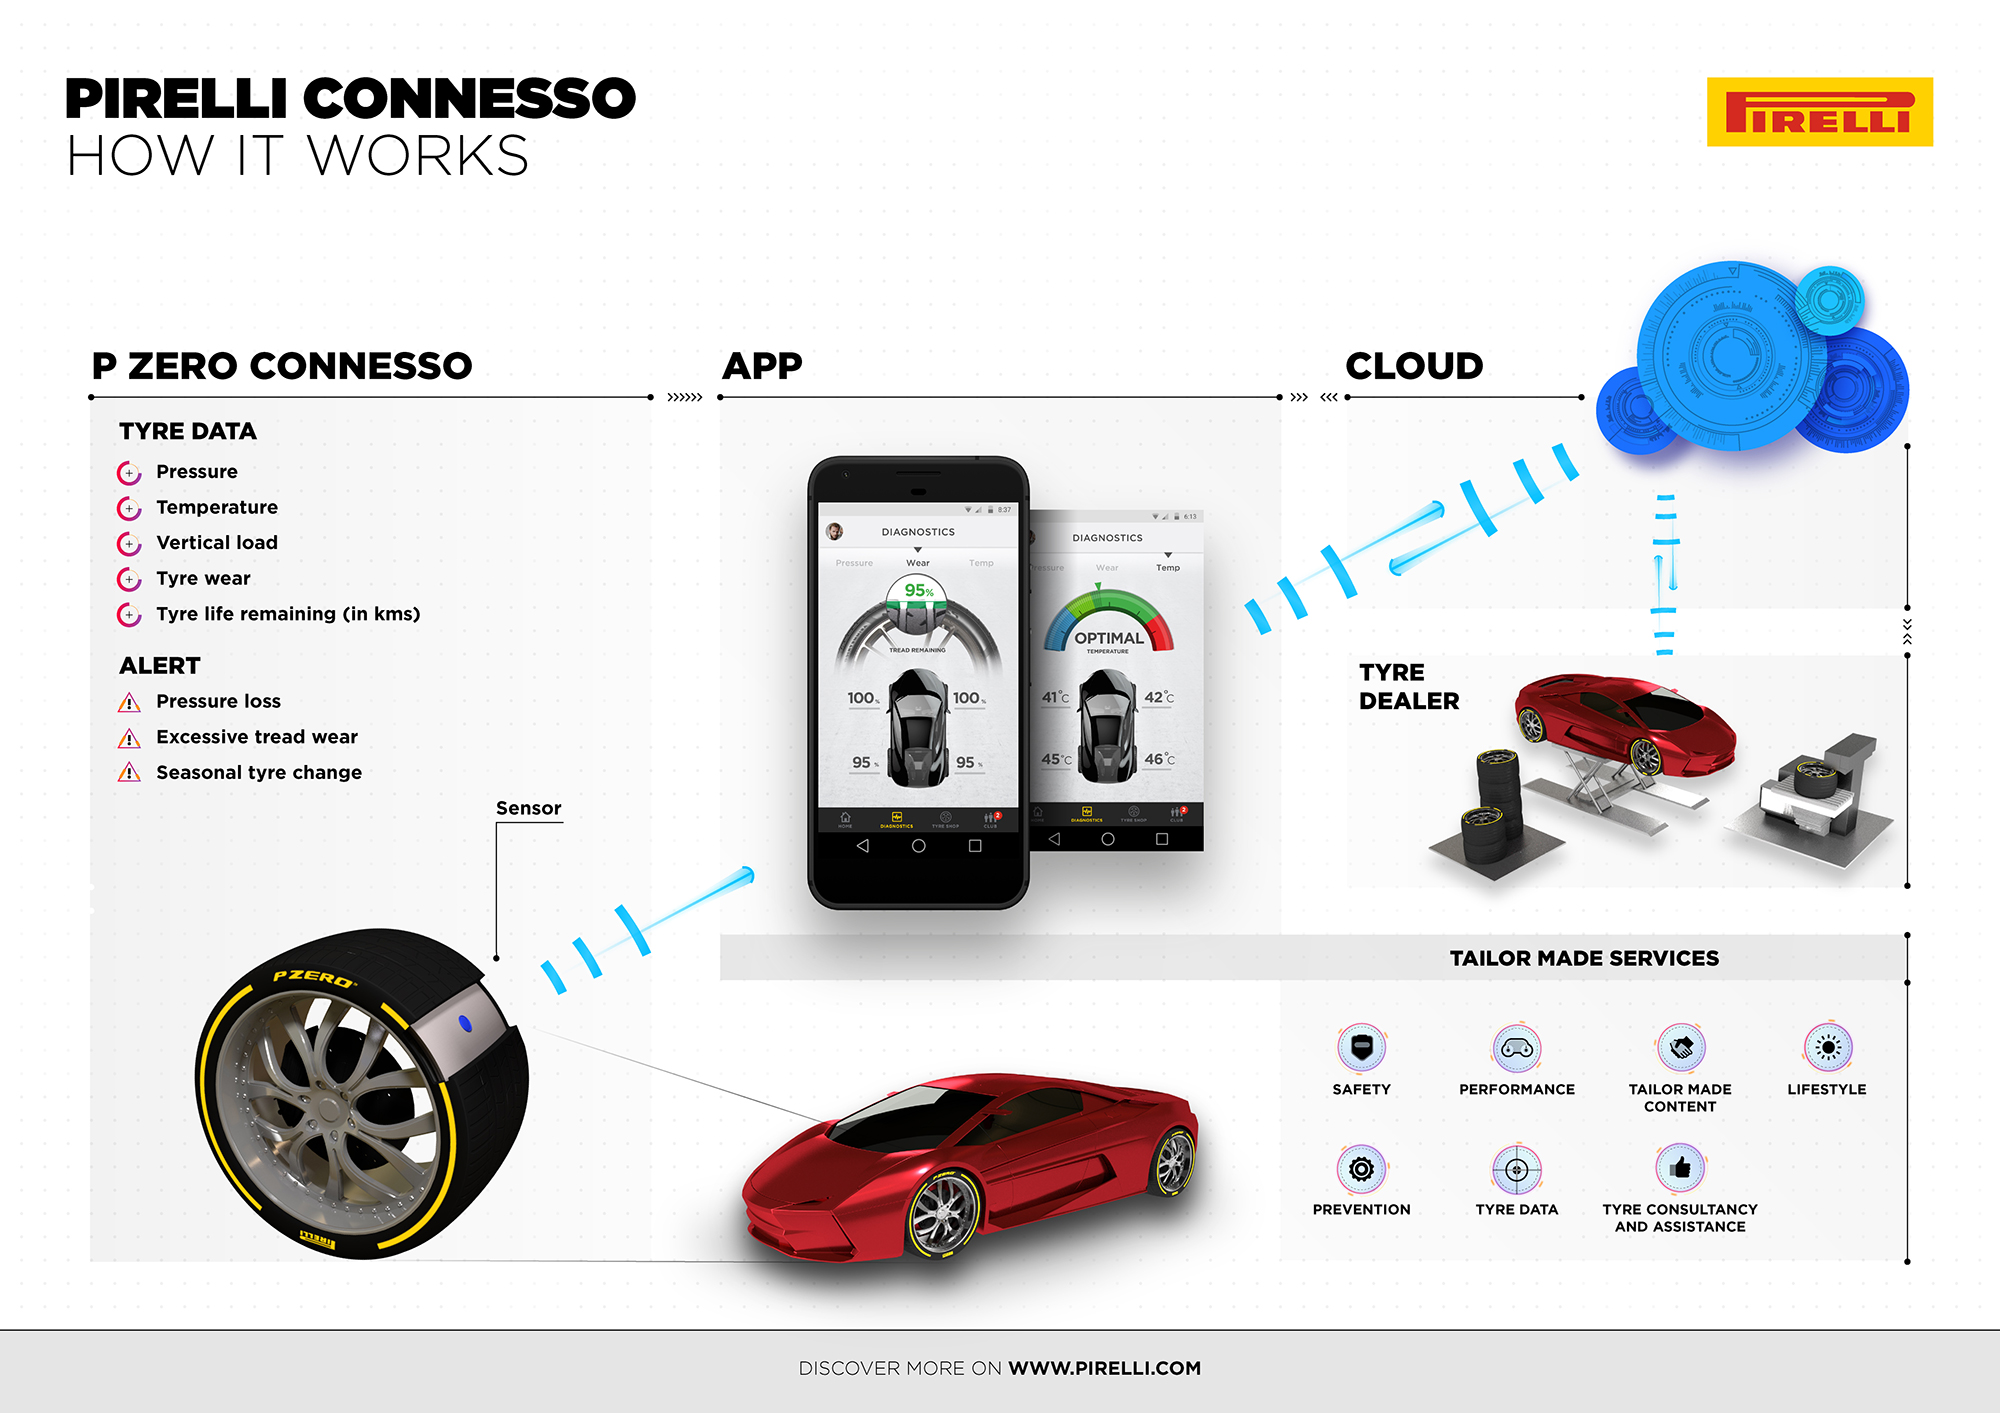 Pirelli Connesso smart tyres